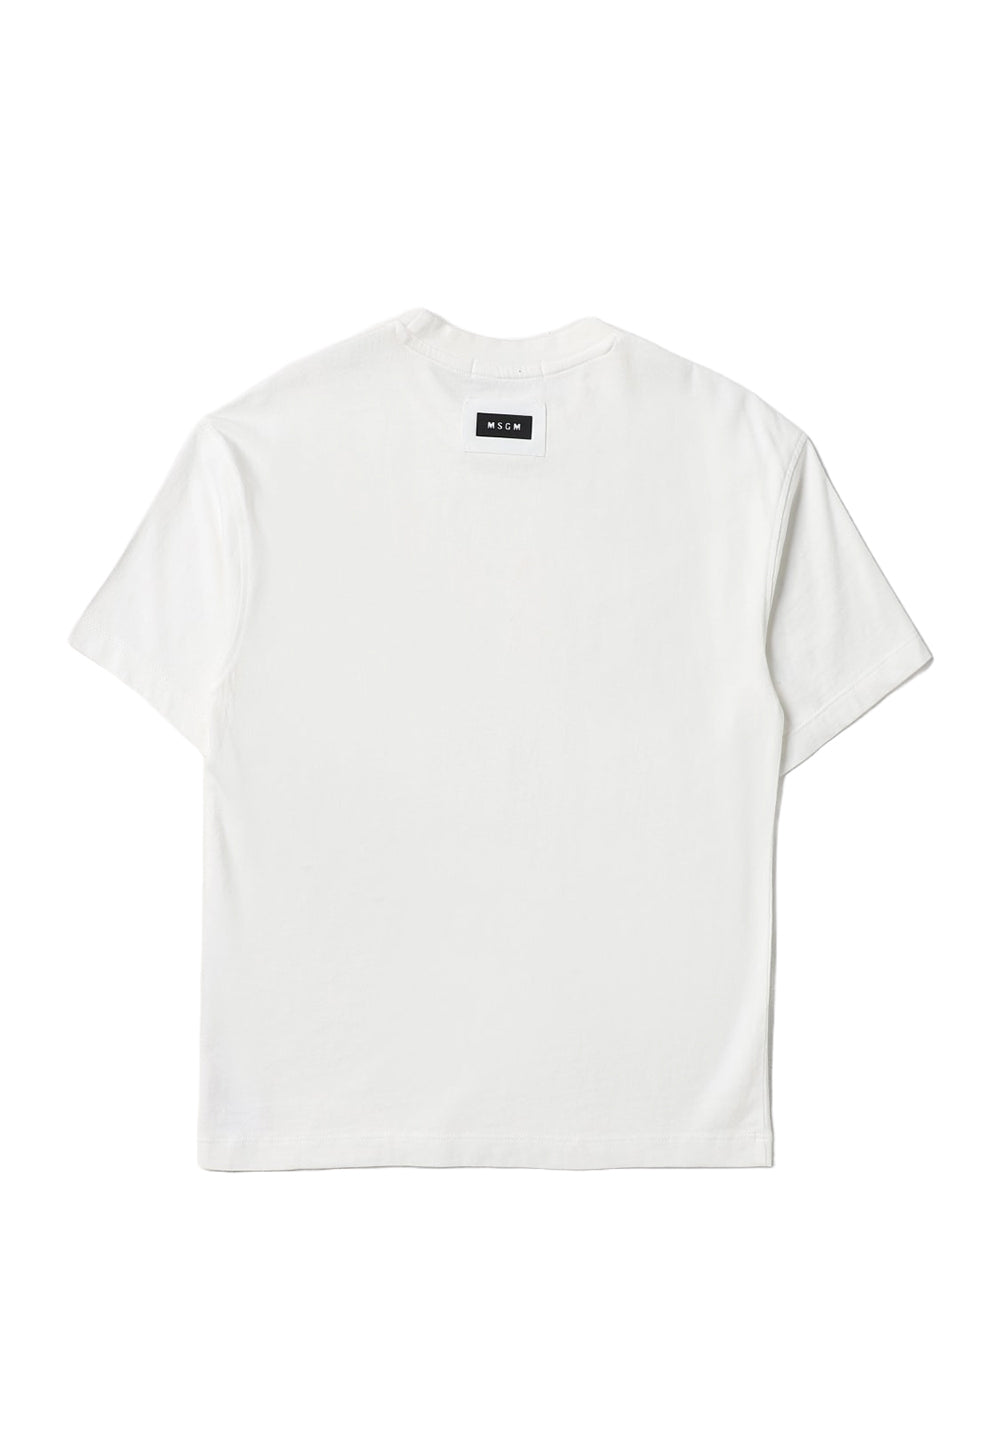 White t-shirt for boy